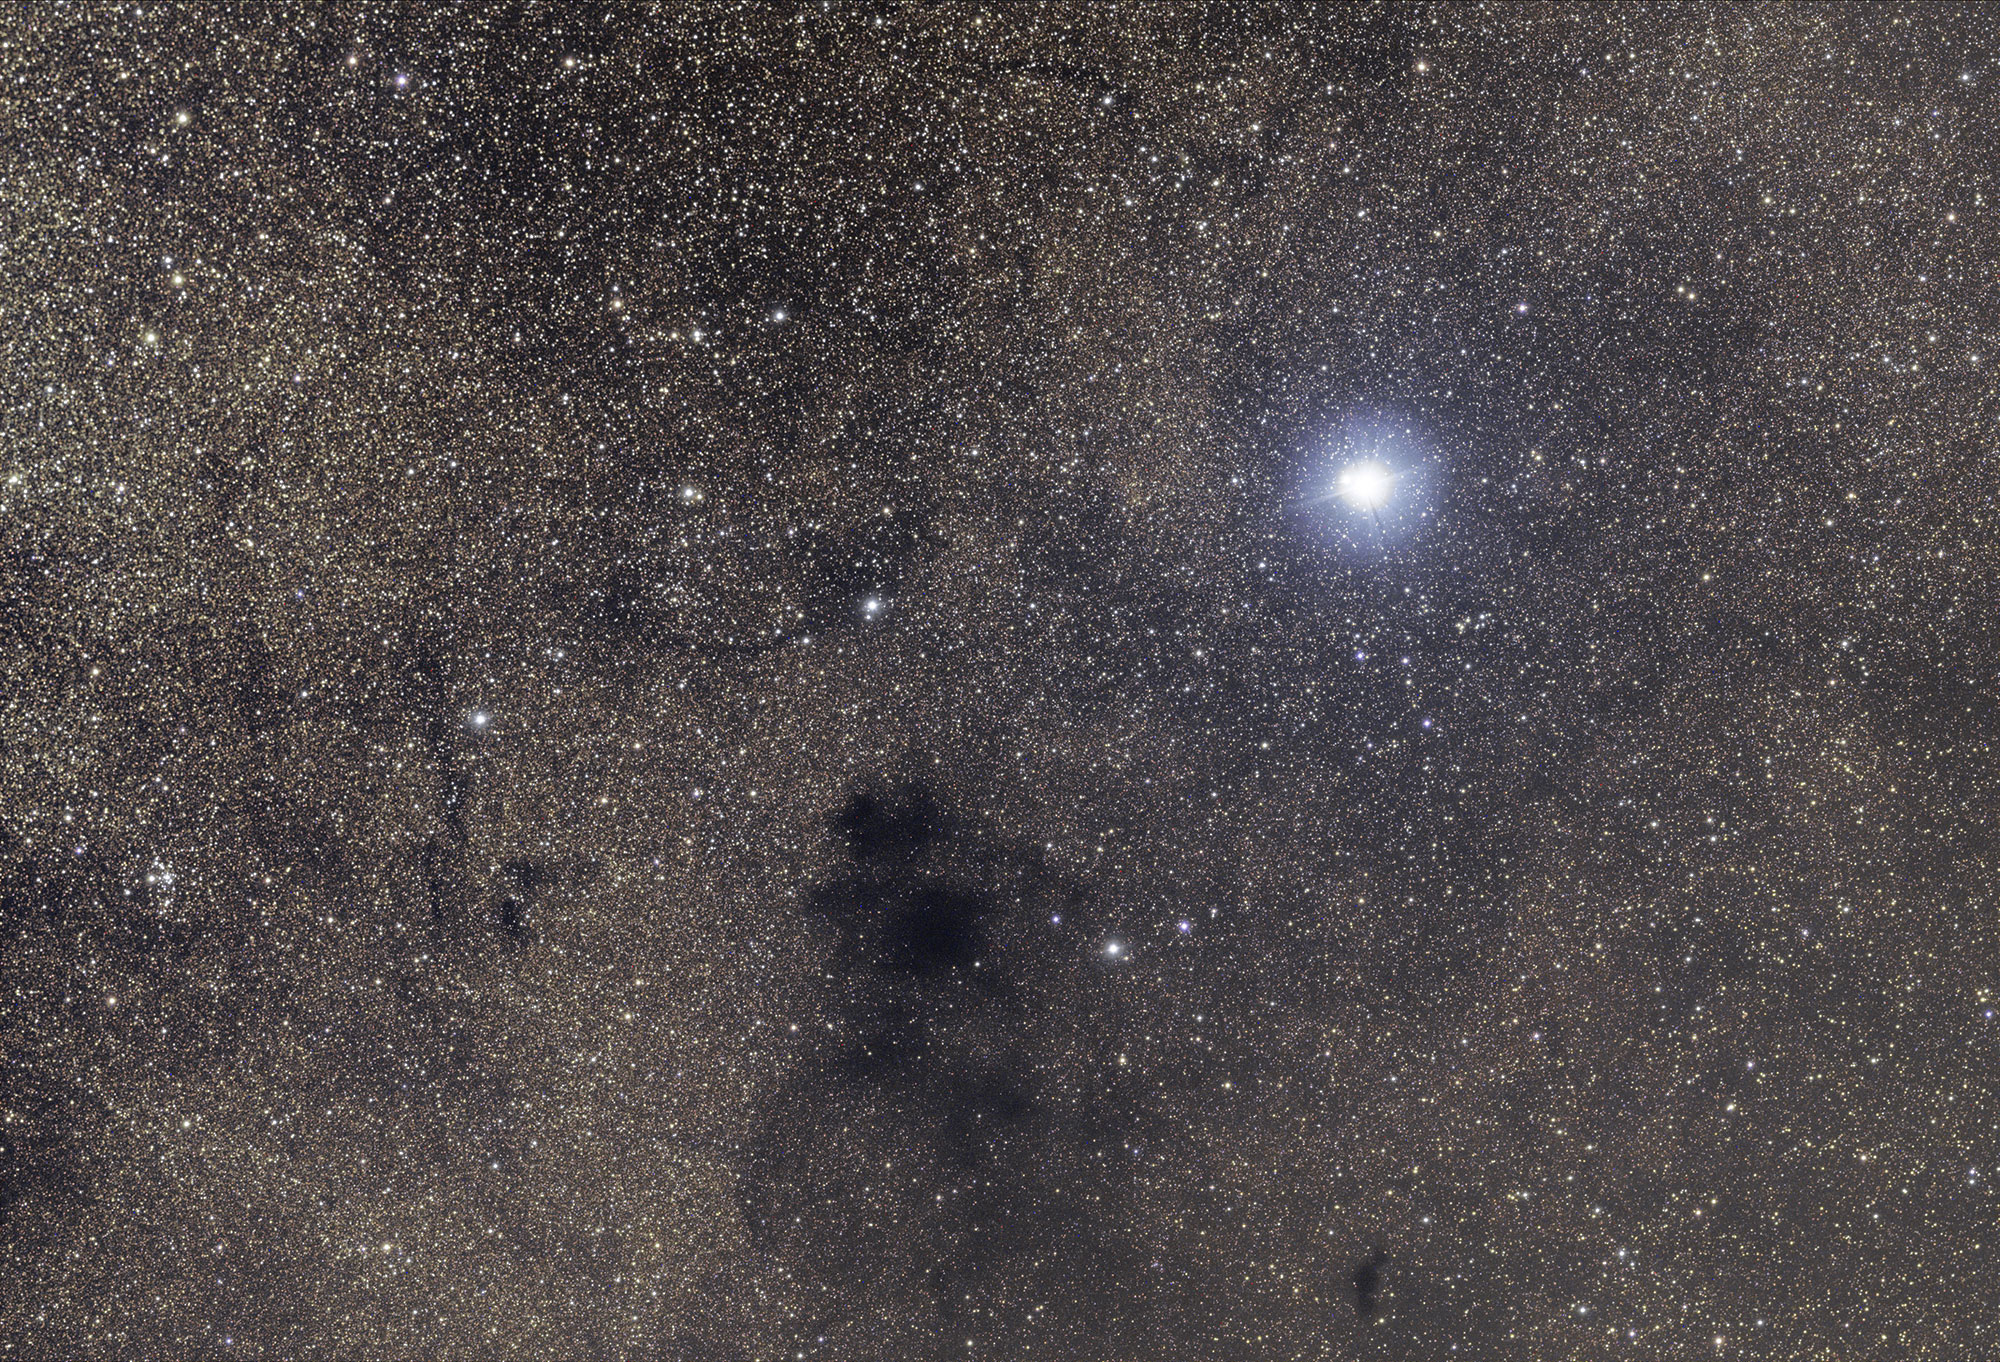 Acrux star field captures with a RASA8 telescope & ASI294MC Pro one shot colour camera